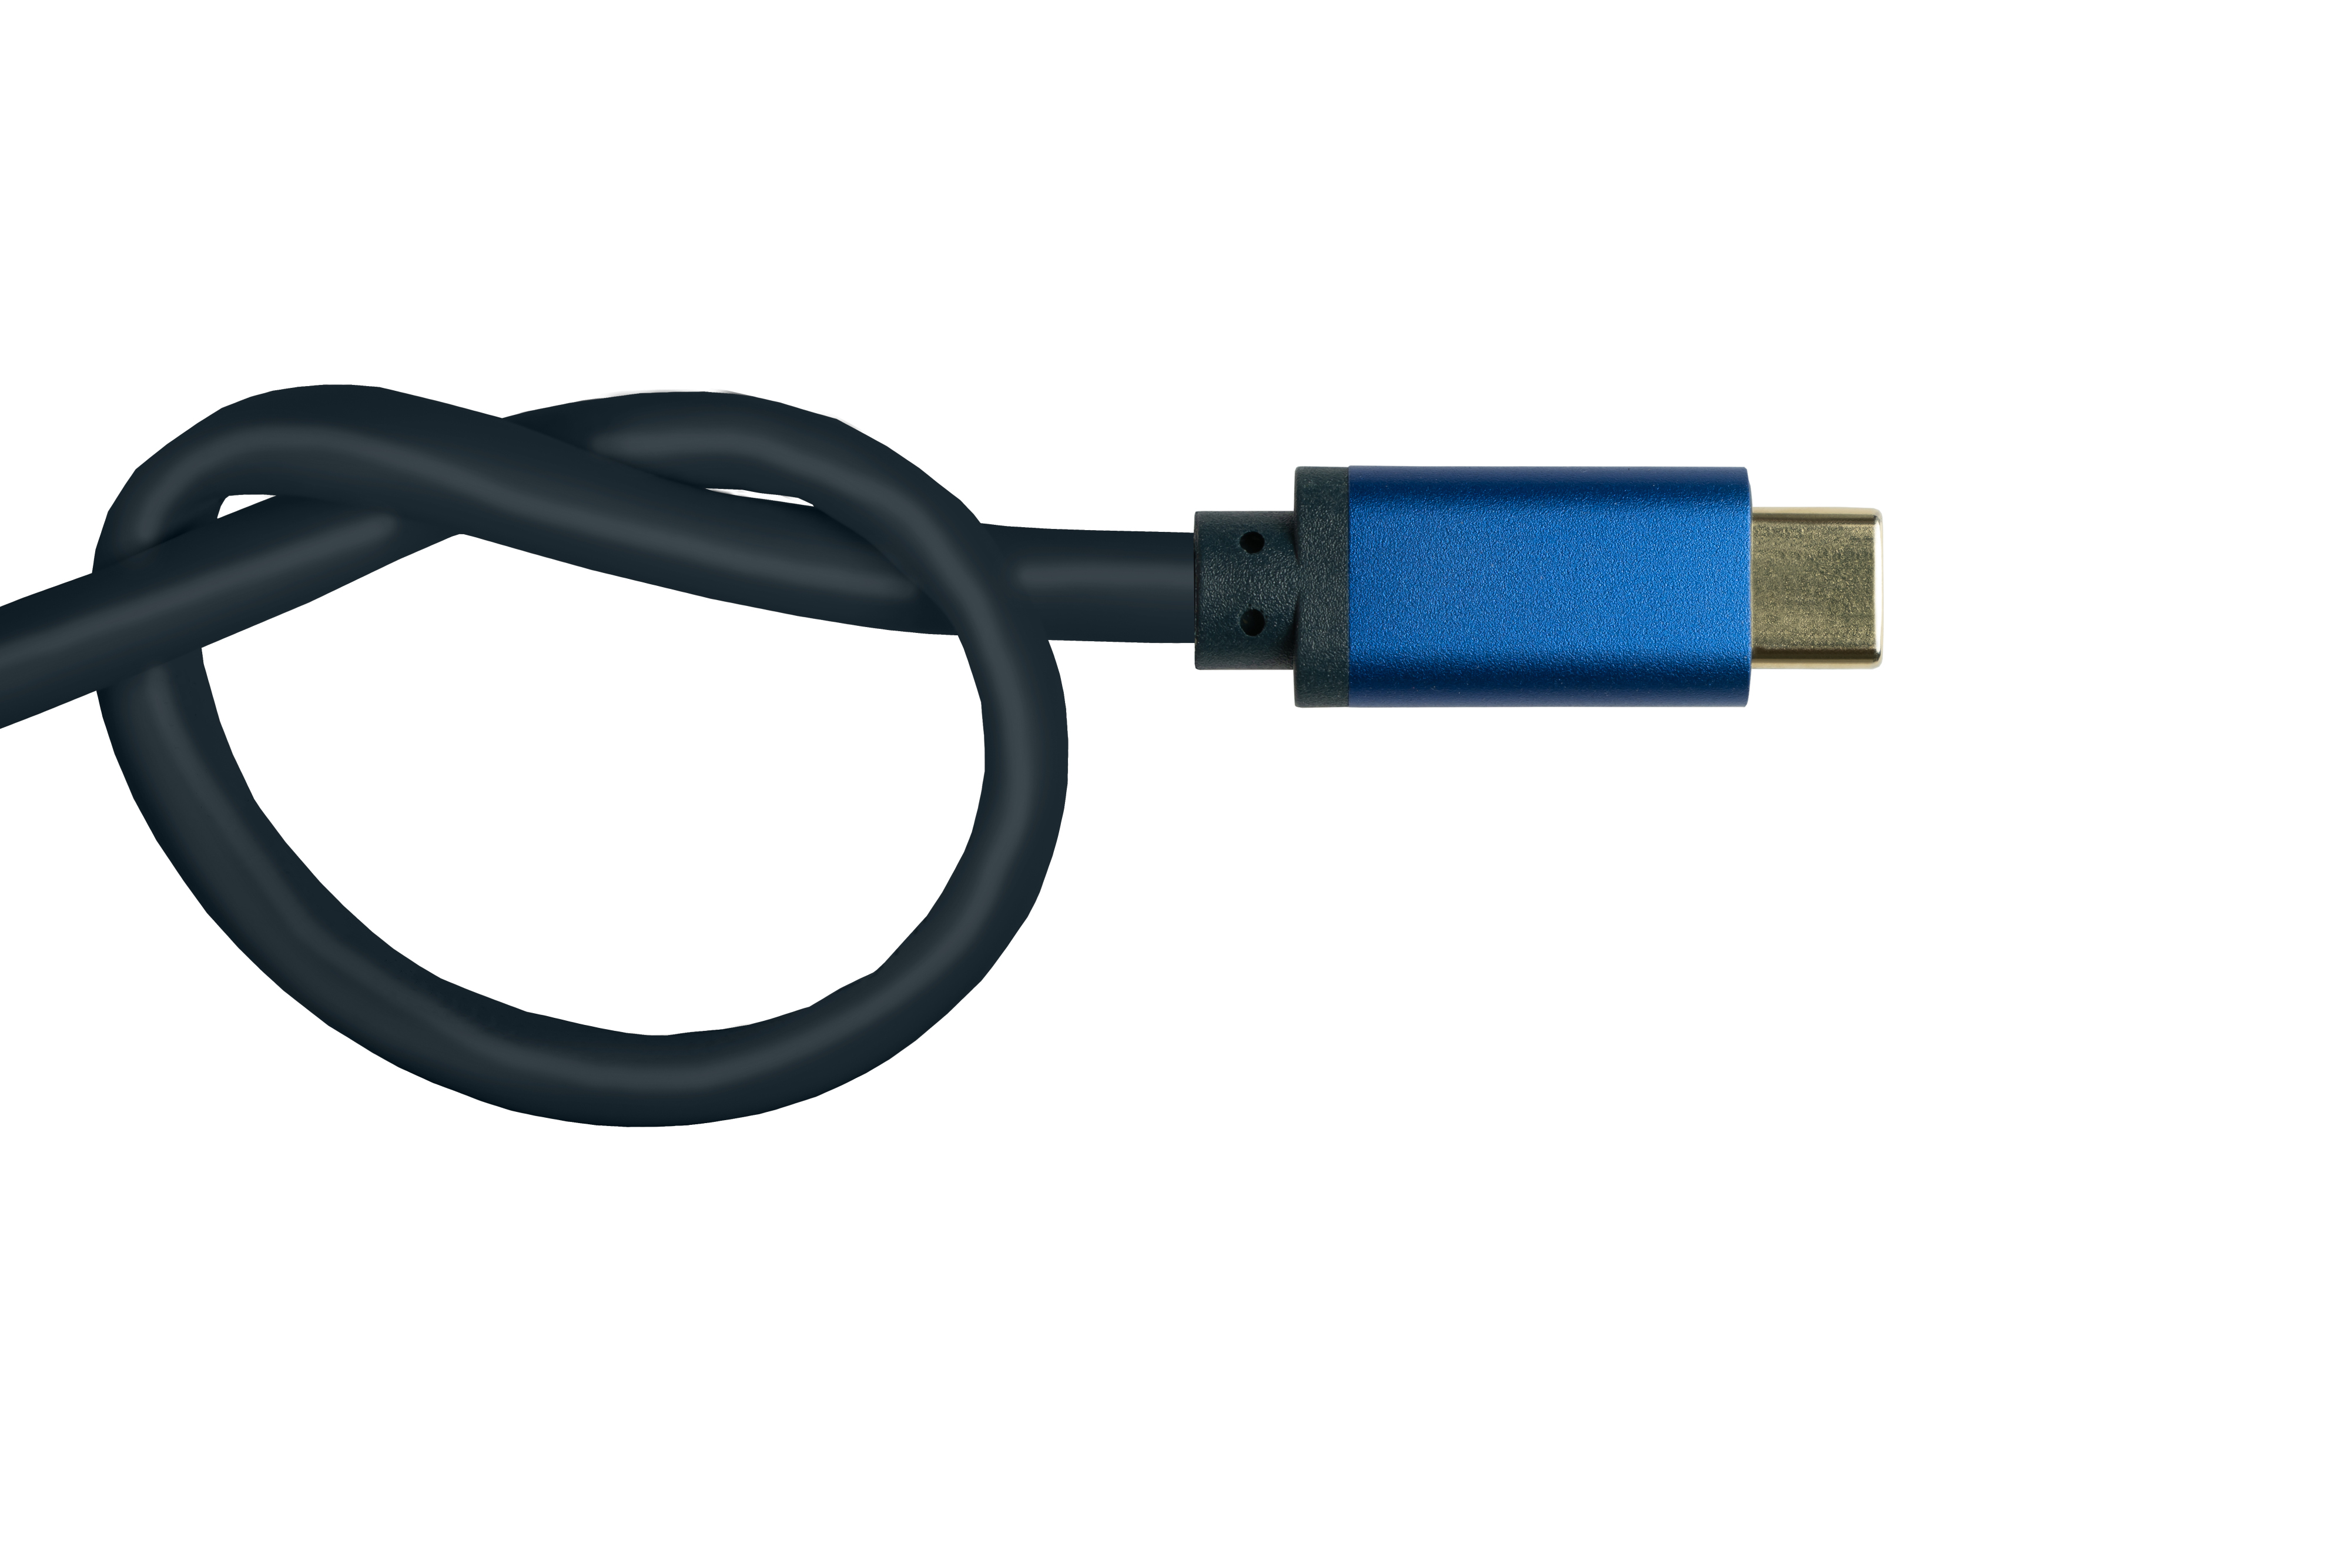 GOOD CONNECTIONS USB-C™ an CU, @60Hz, 2.0b Aluminiumgehäuse, Kabel, dunkelblau 4K SmartFLEX UHD Adapterkabel HDMI